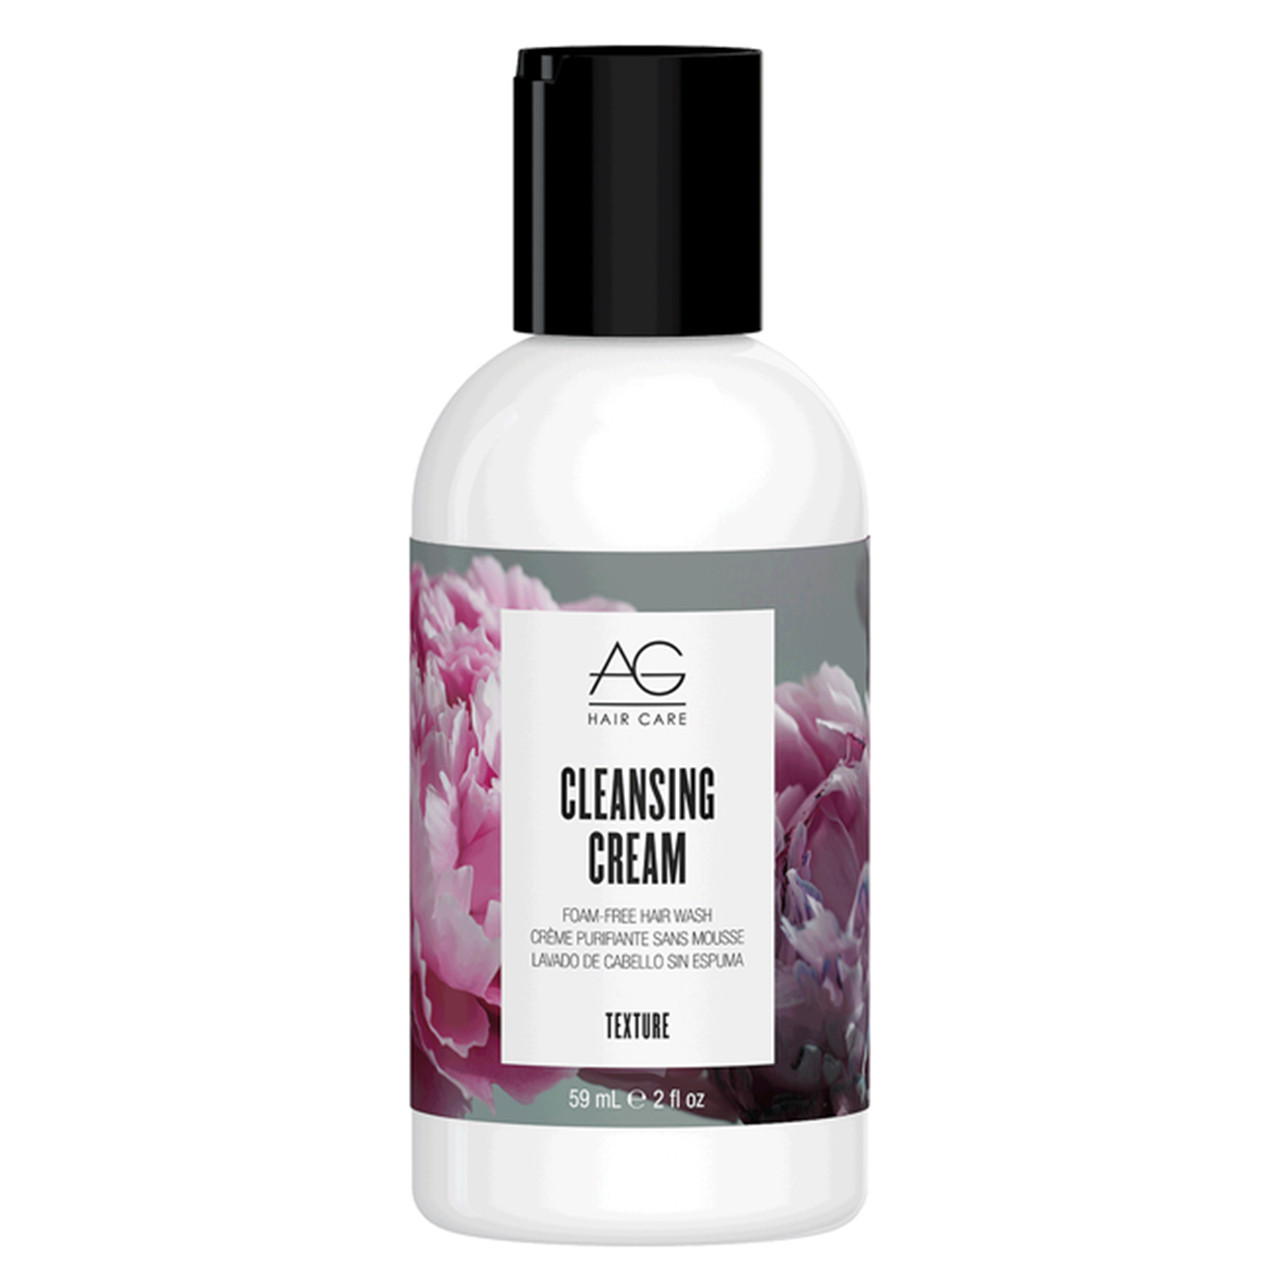 AG Hair Cleansing Cream - Travel Size